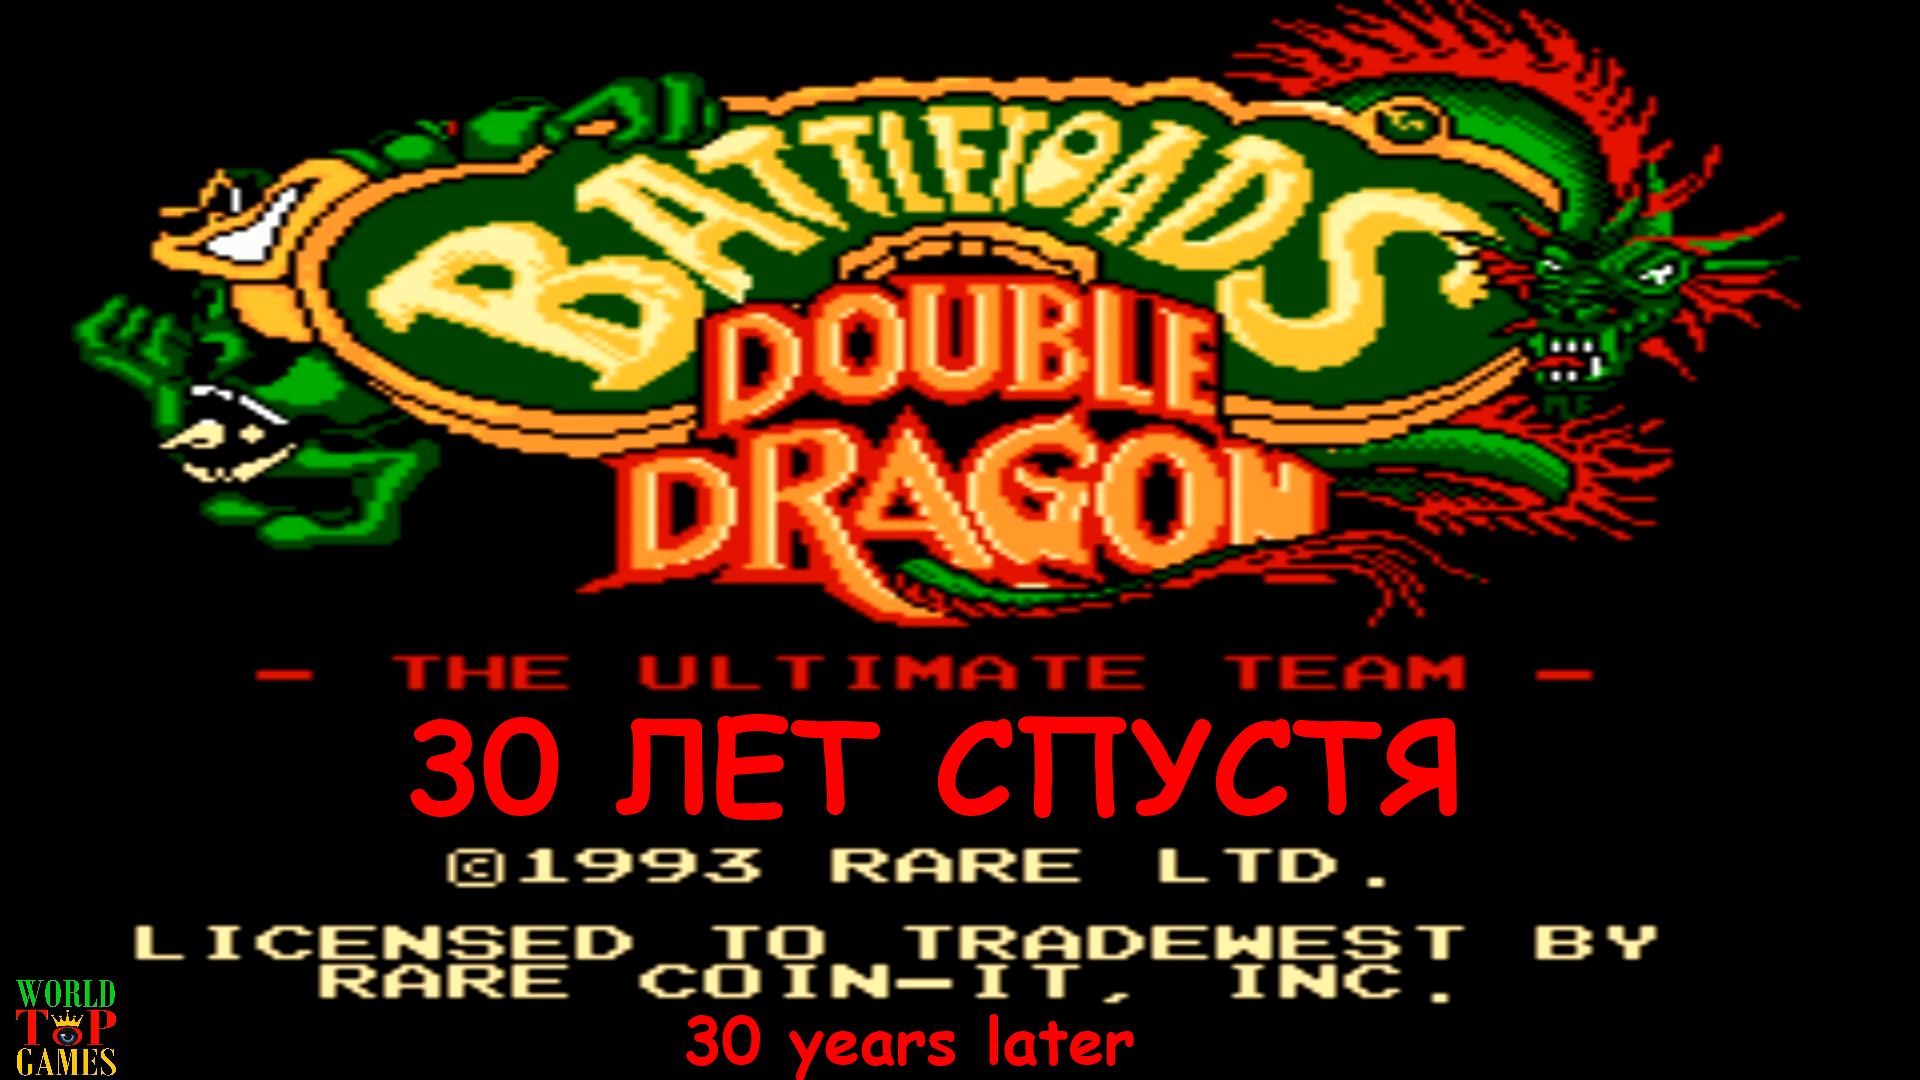 Battletoads 2022. Battletoads Double Dragon Sega. Battletoads and Double Dragon (1993 год, rare). Double Dragon Денди. Battletoads & Double Dragon - the Ultimate Team.